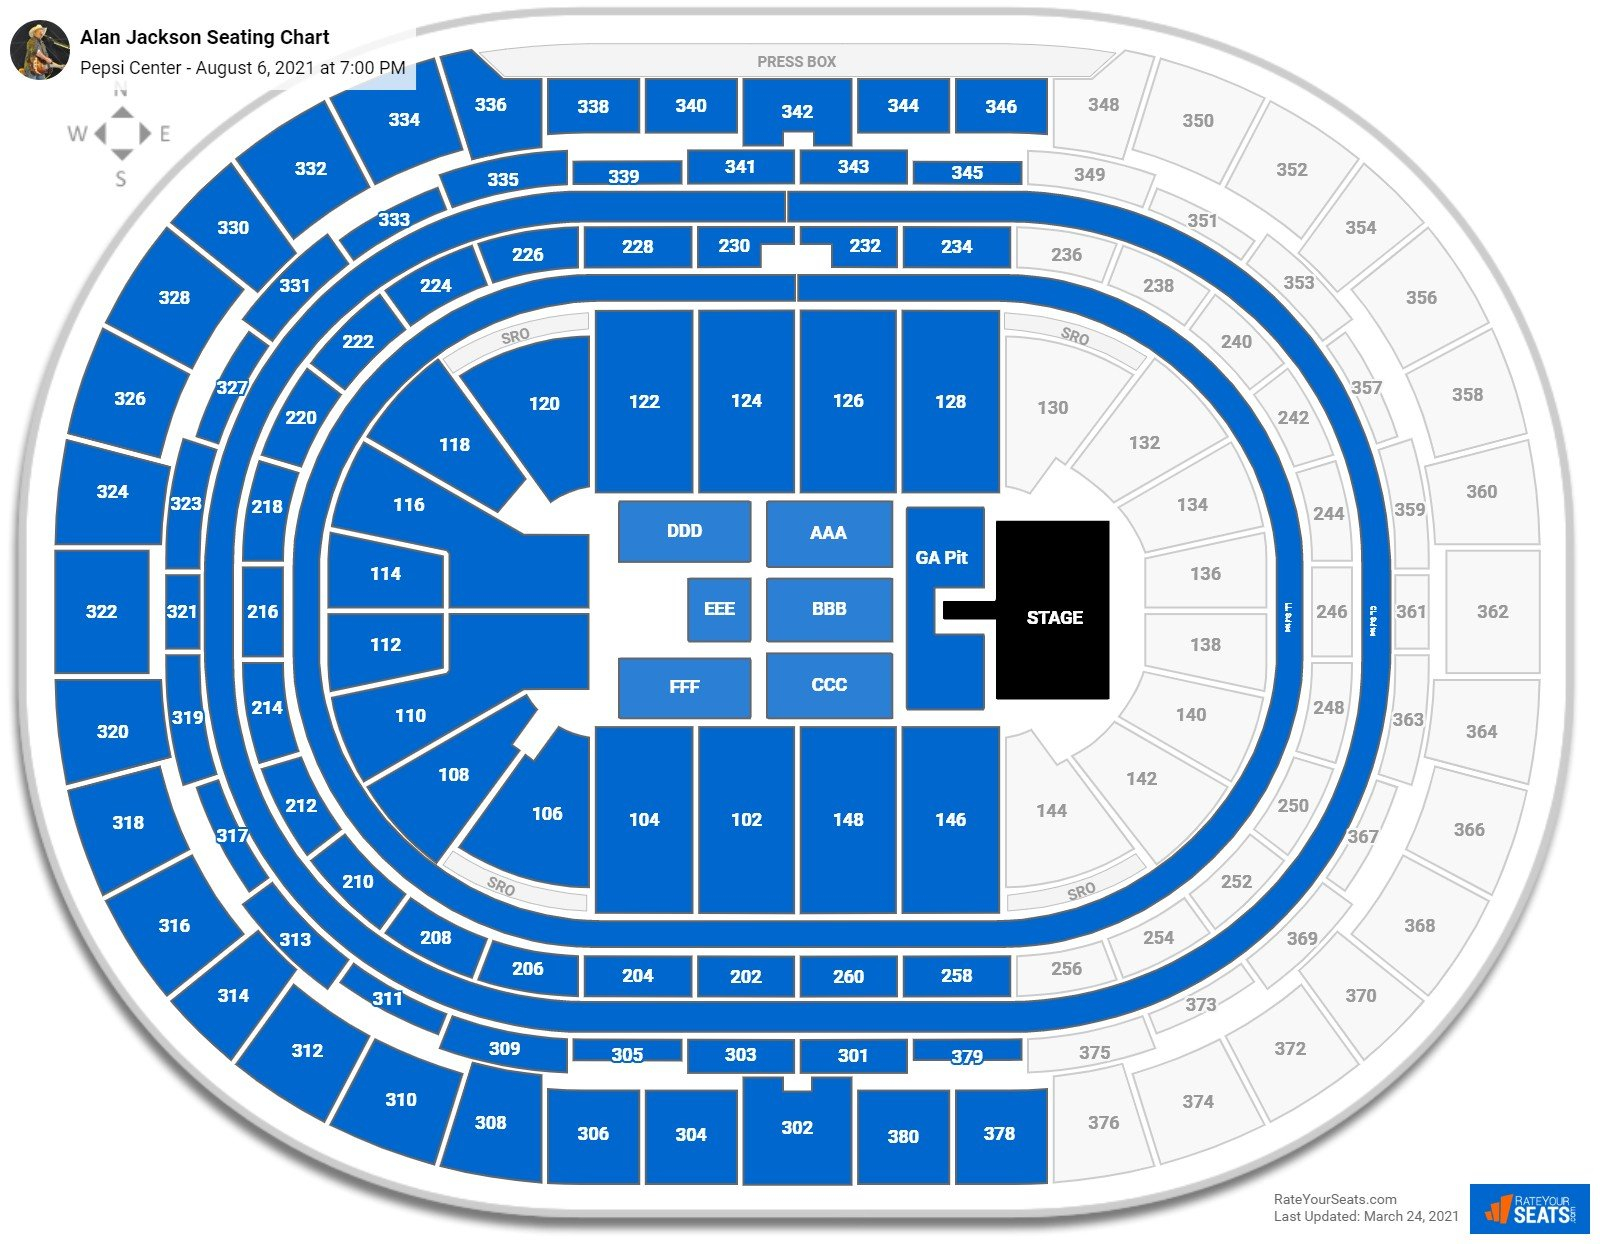 Ball Arena Concert Seating Chart Arena Seating Chart